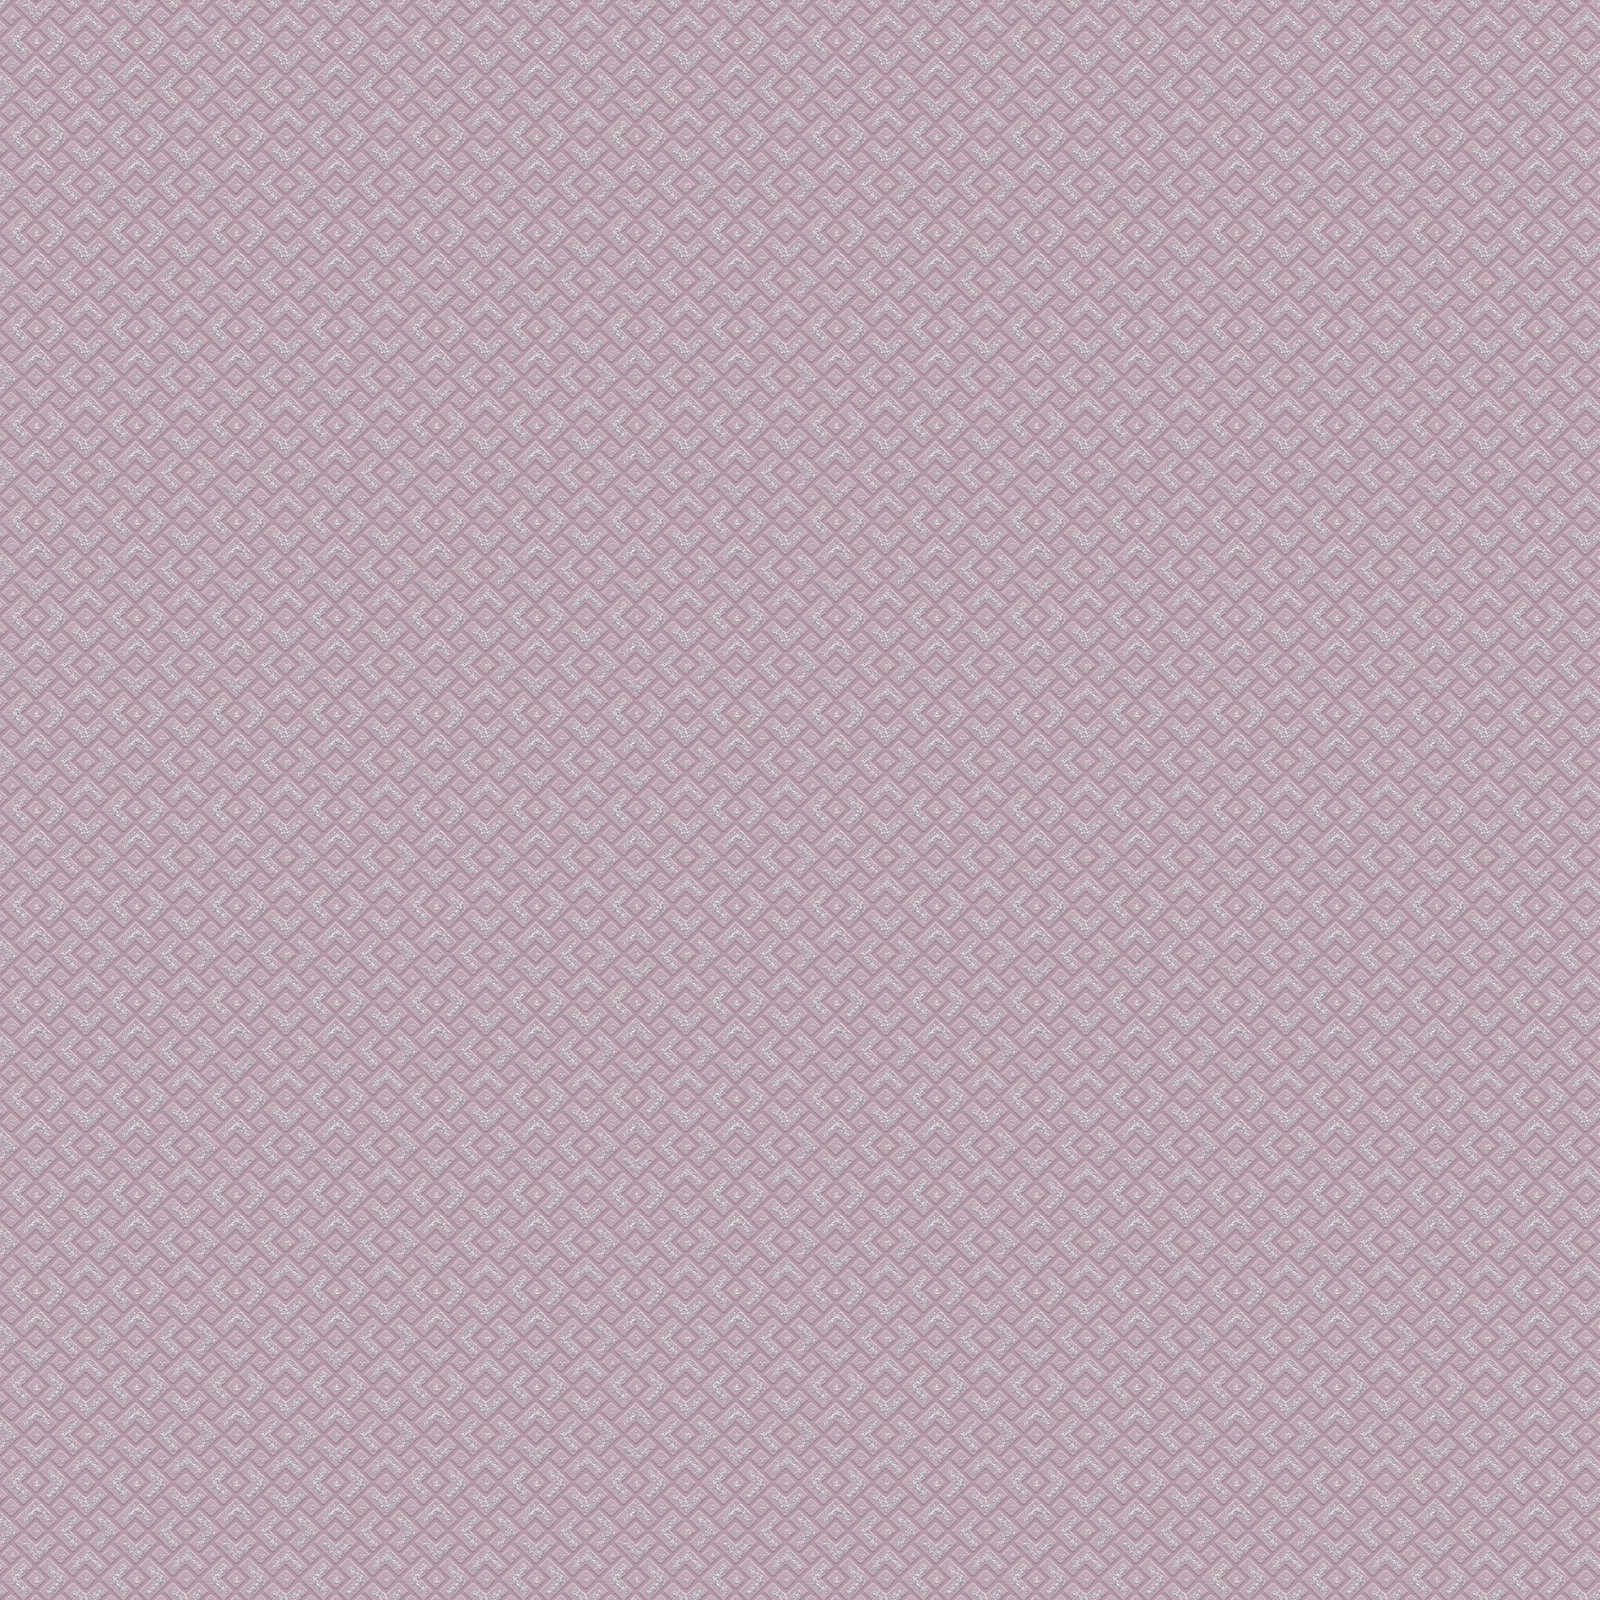 Plain wallpaper old pink with metallic effect - purple
